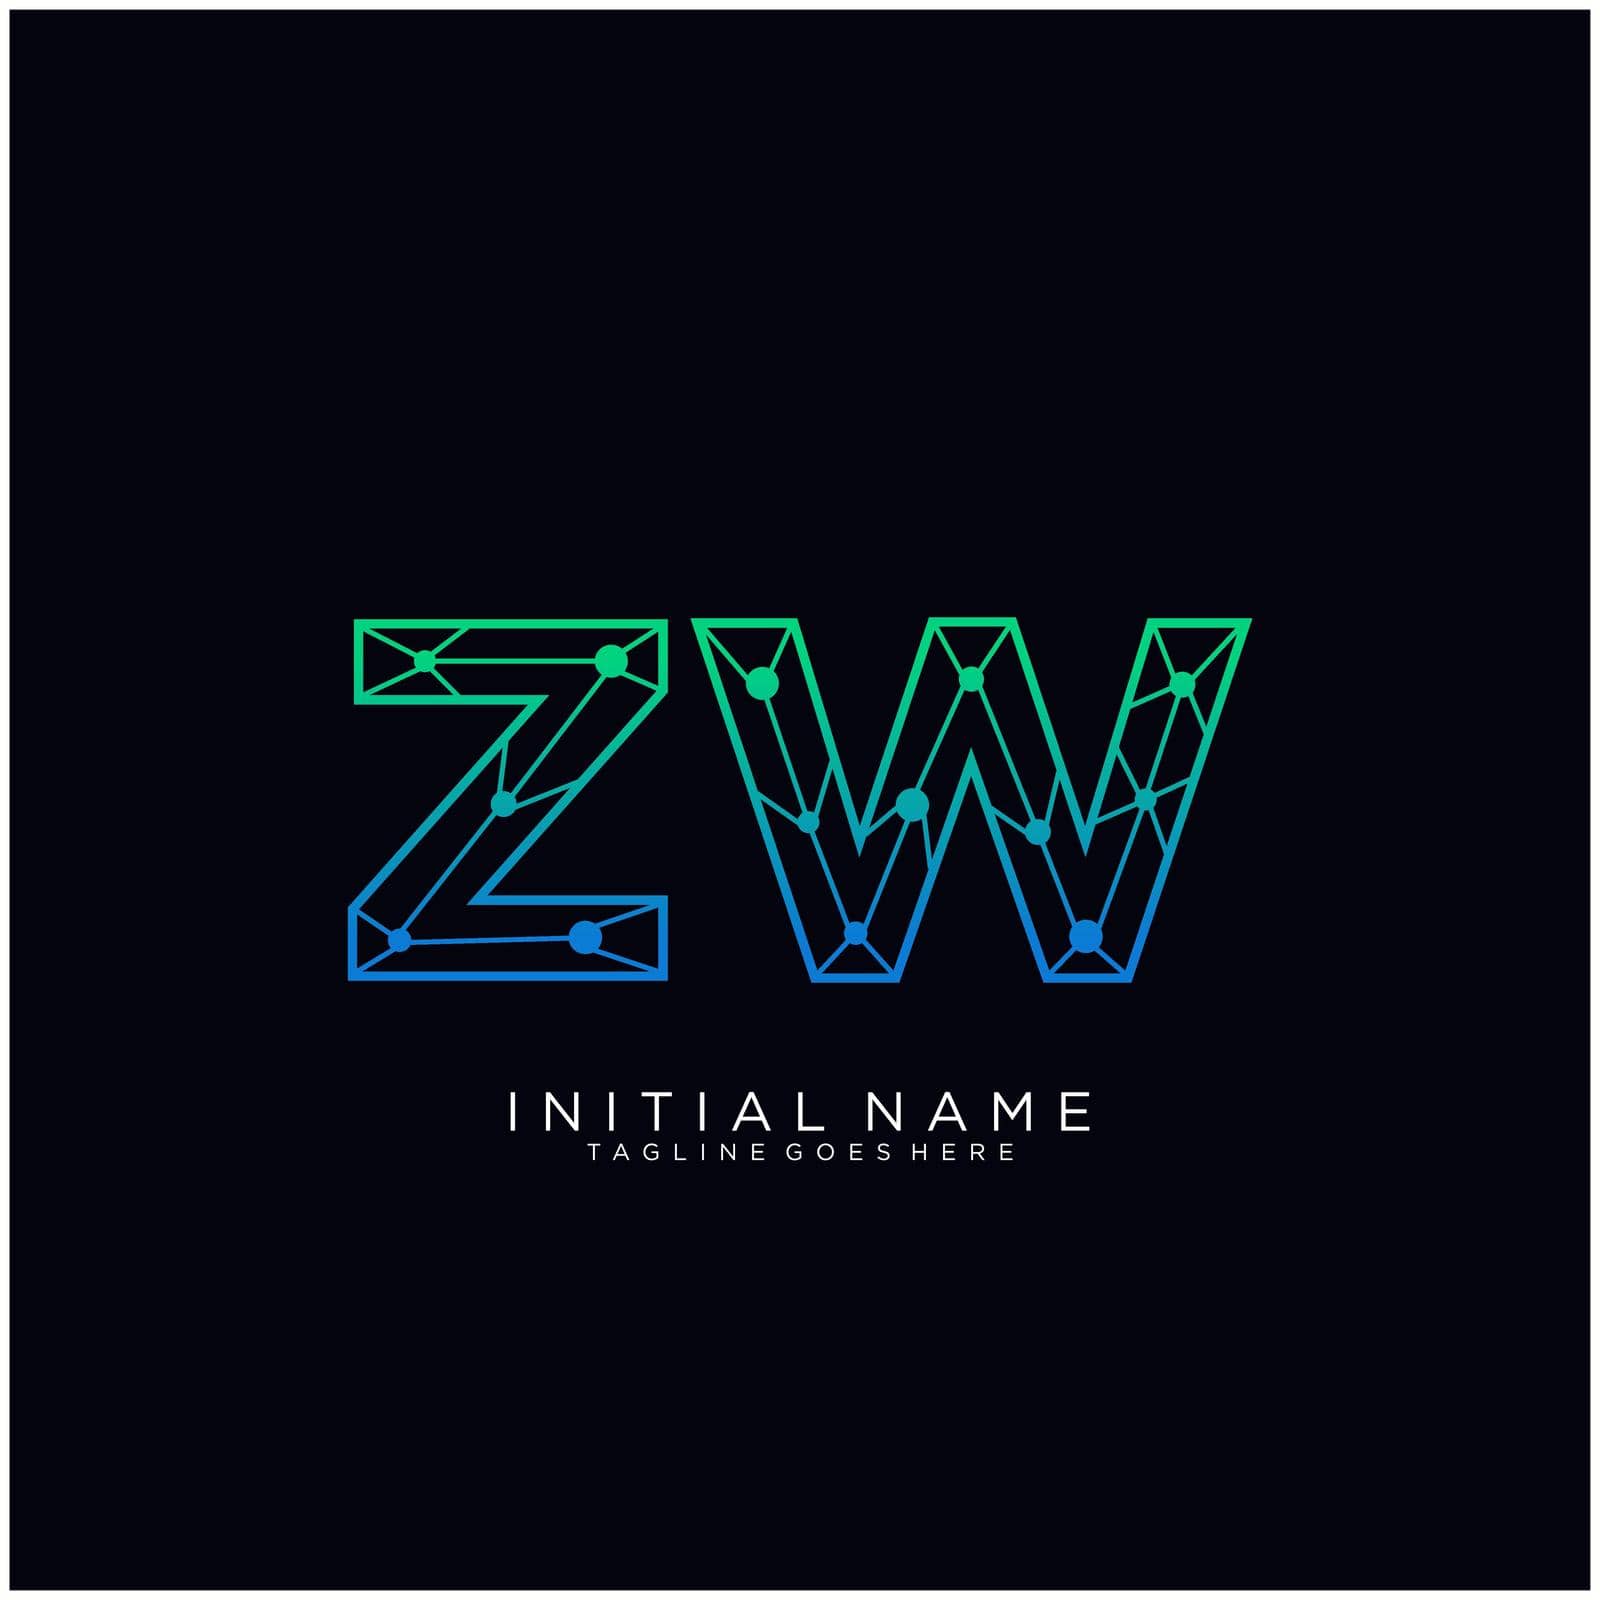 ZW Letter logo icon design template elements by liaanniesatul